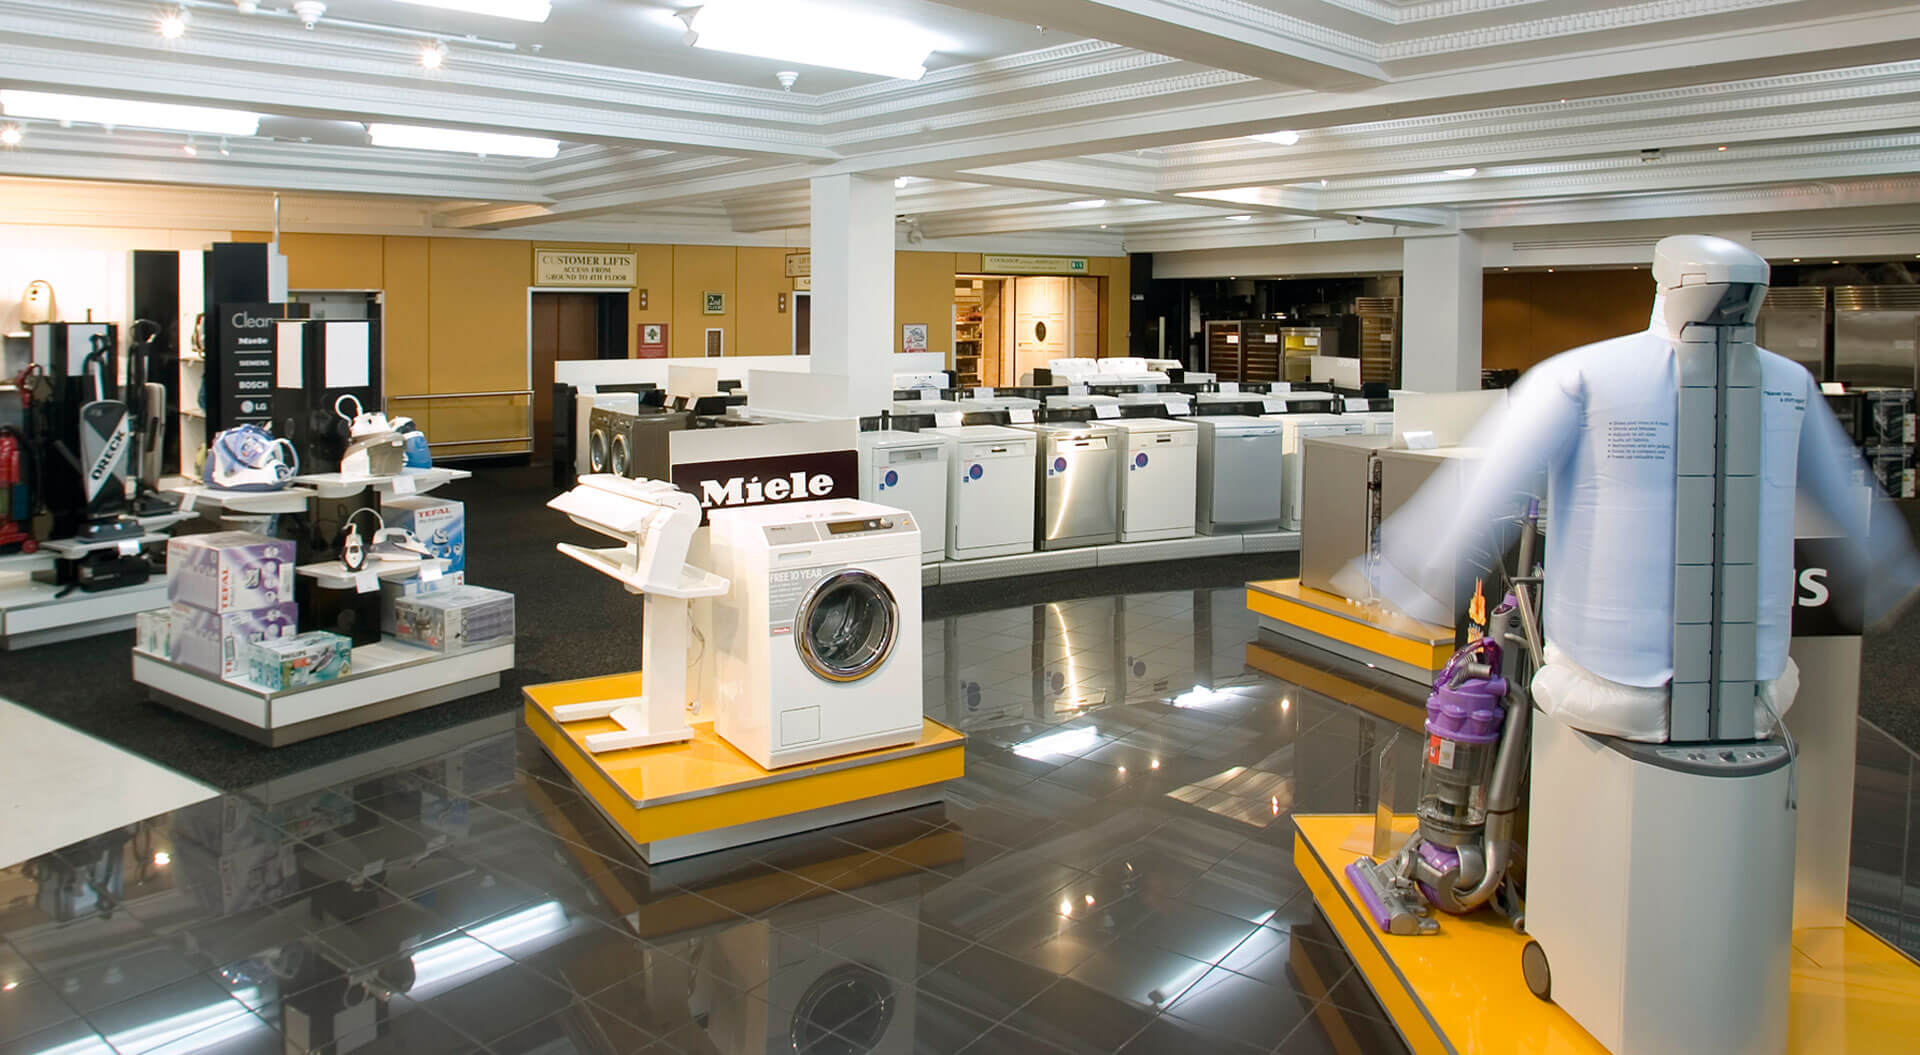 Harrods Department Store rebrand identity, interior design washing machines and white goods display